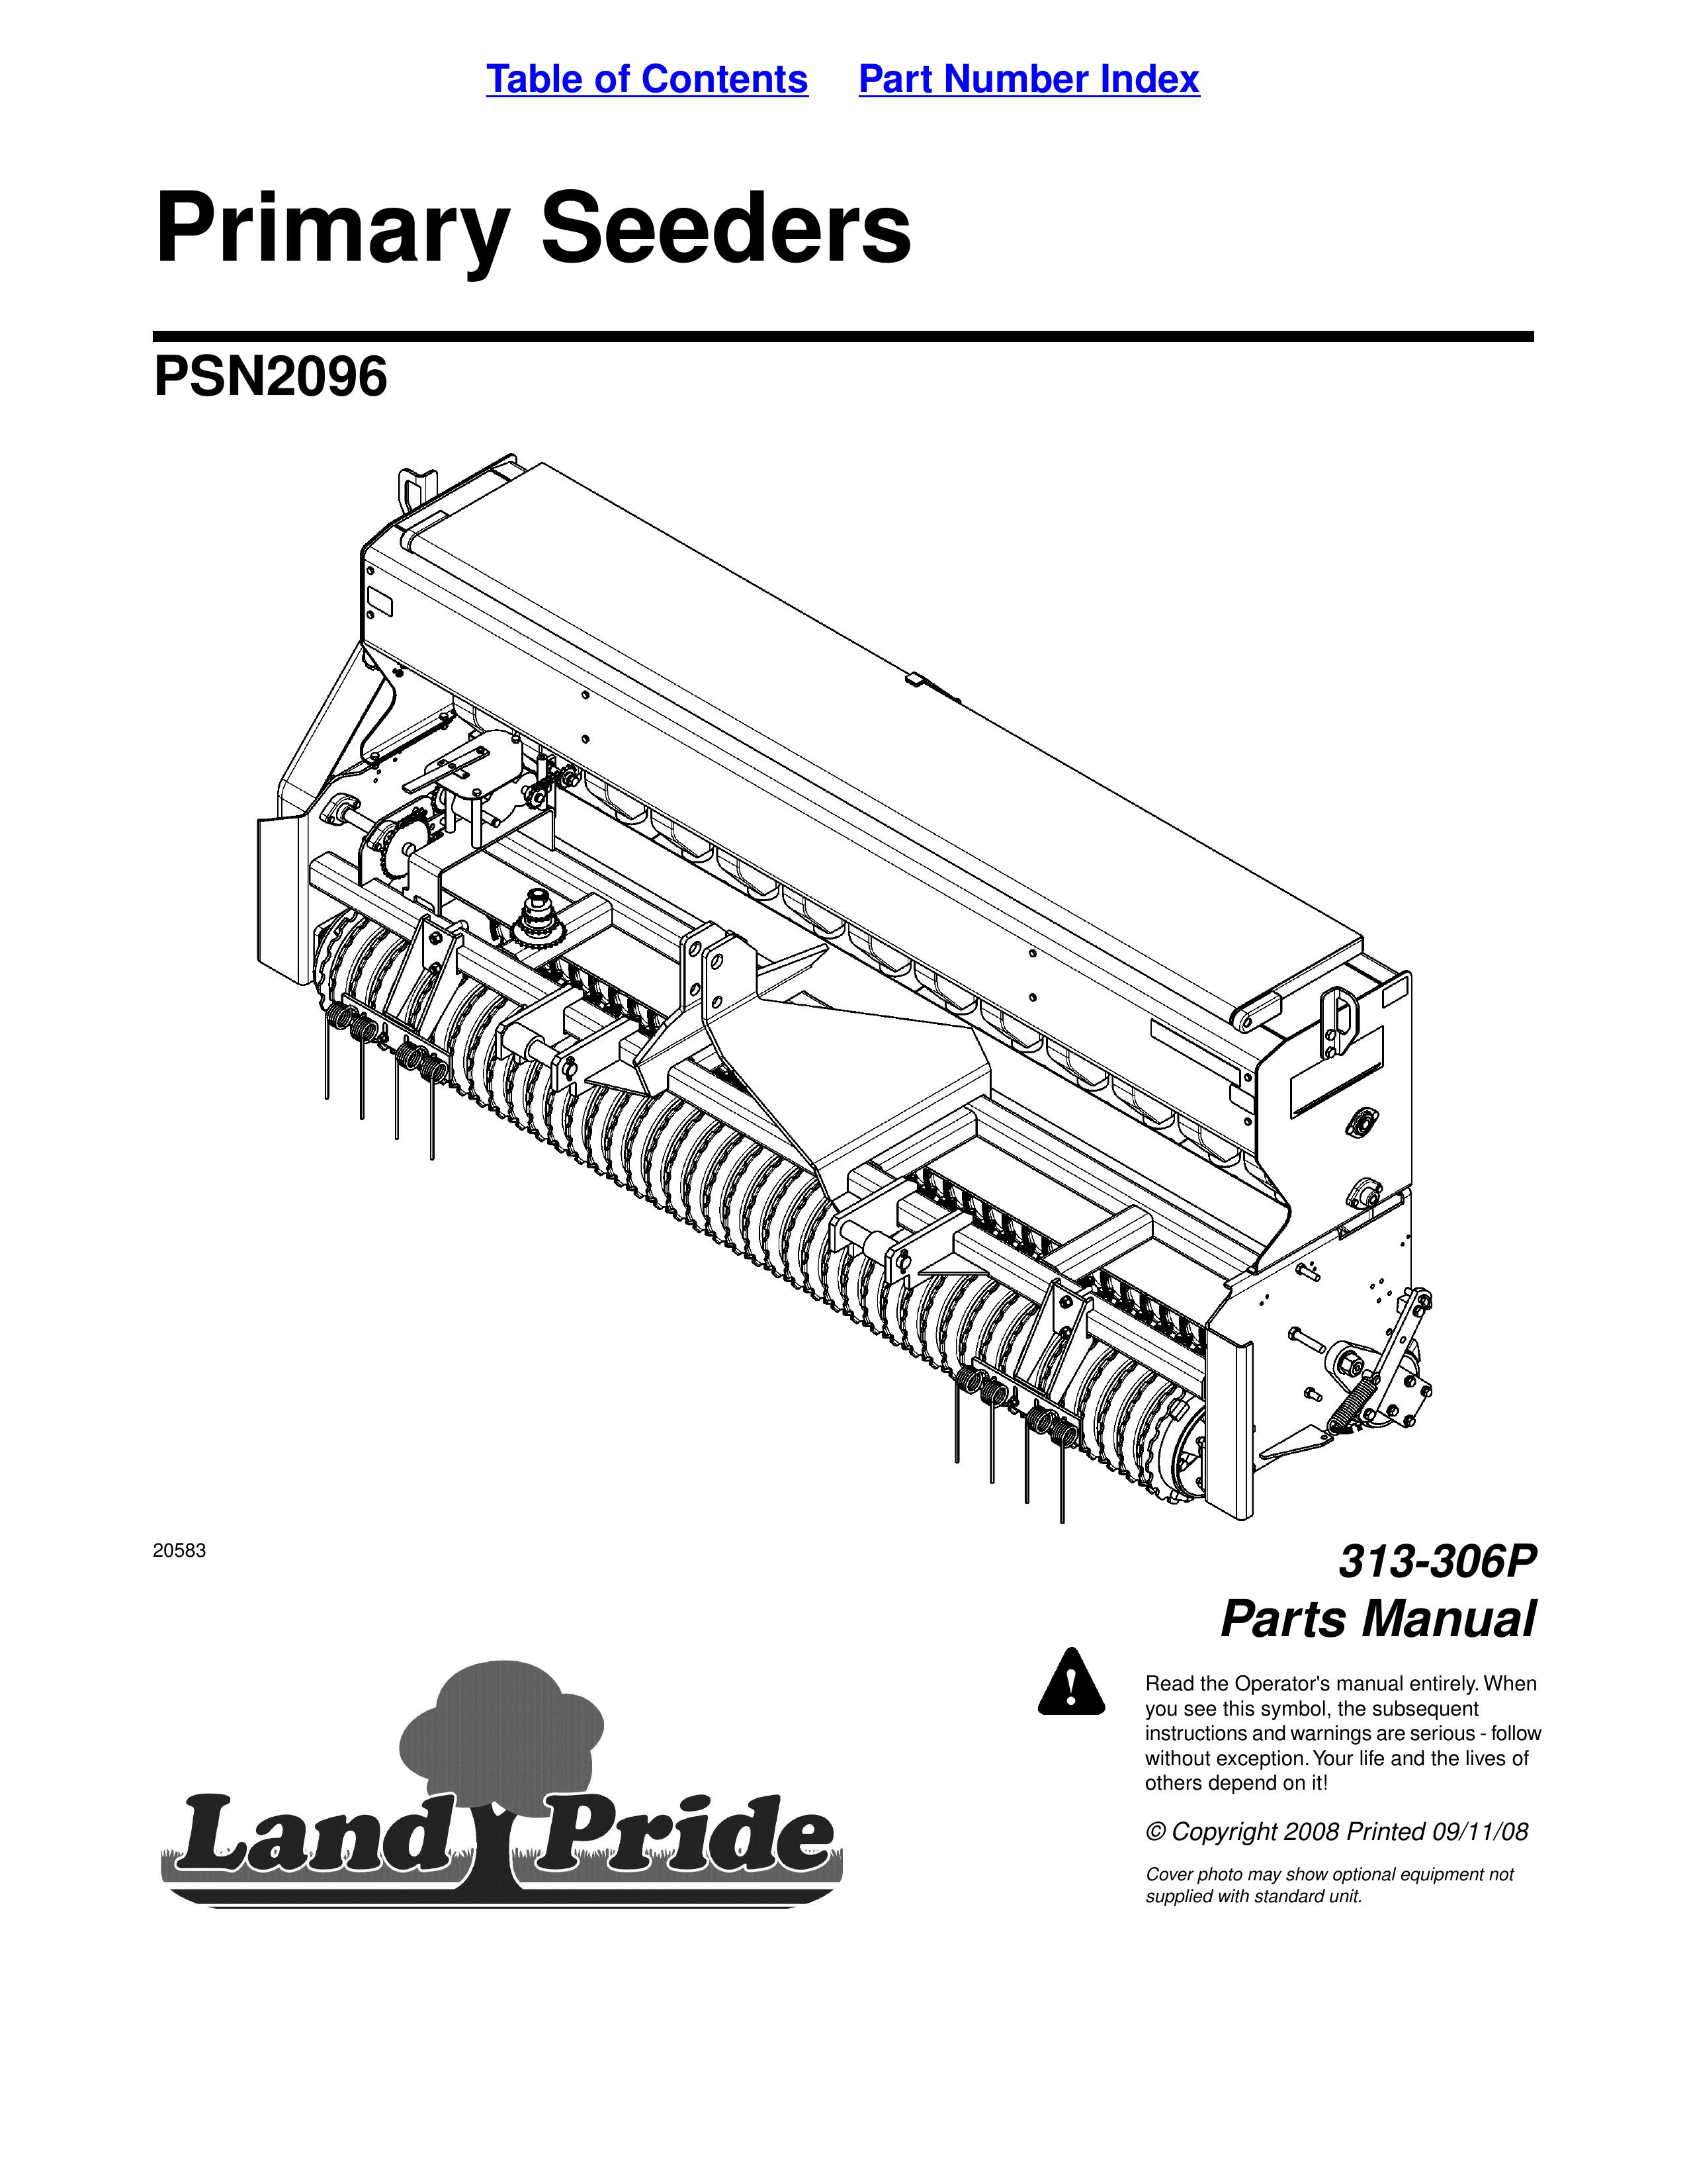 Land Pride 313-306P Spreader User Manual